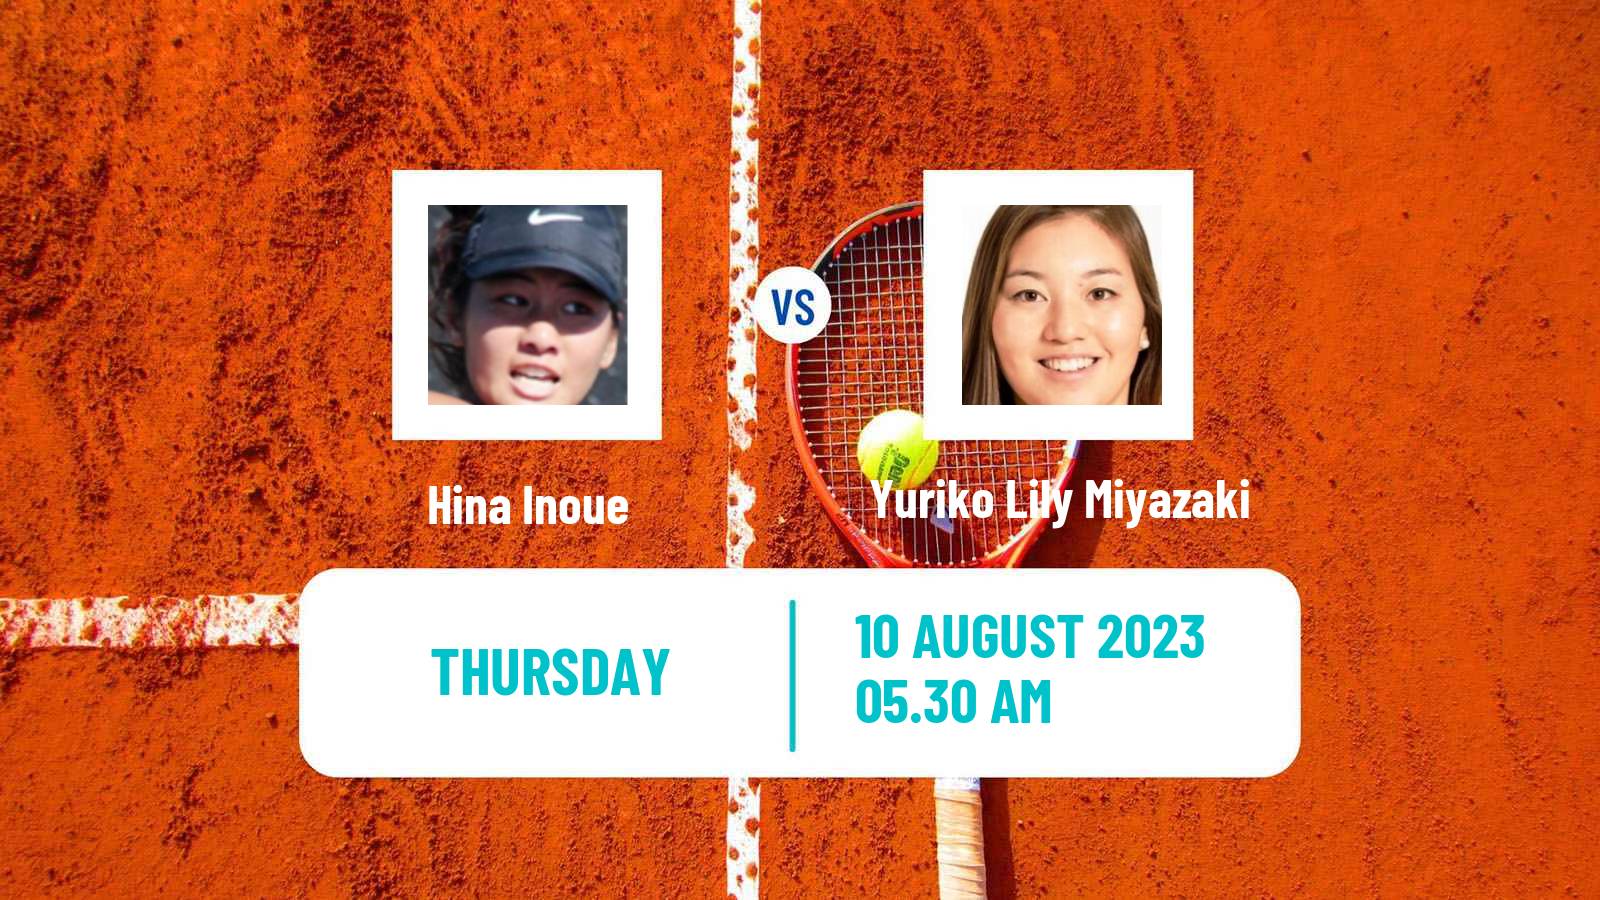 Tennis ITF W25 Roehampton 3 Women Hina Inoue - Yuriko Lily Miyazaki